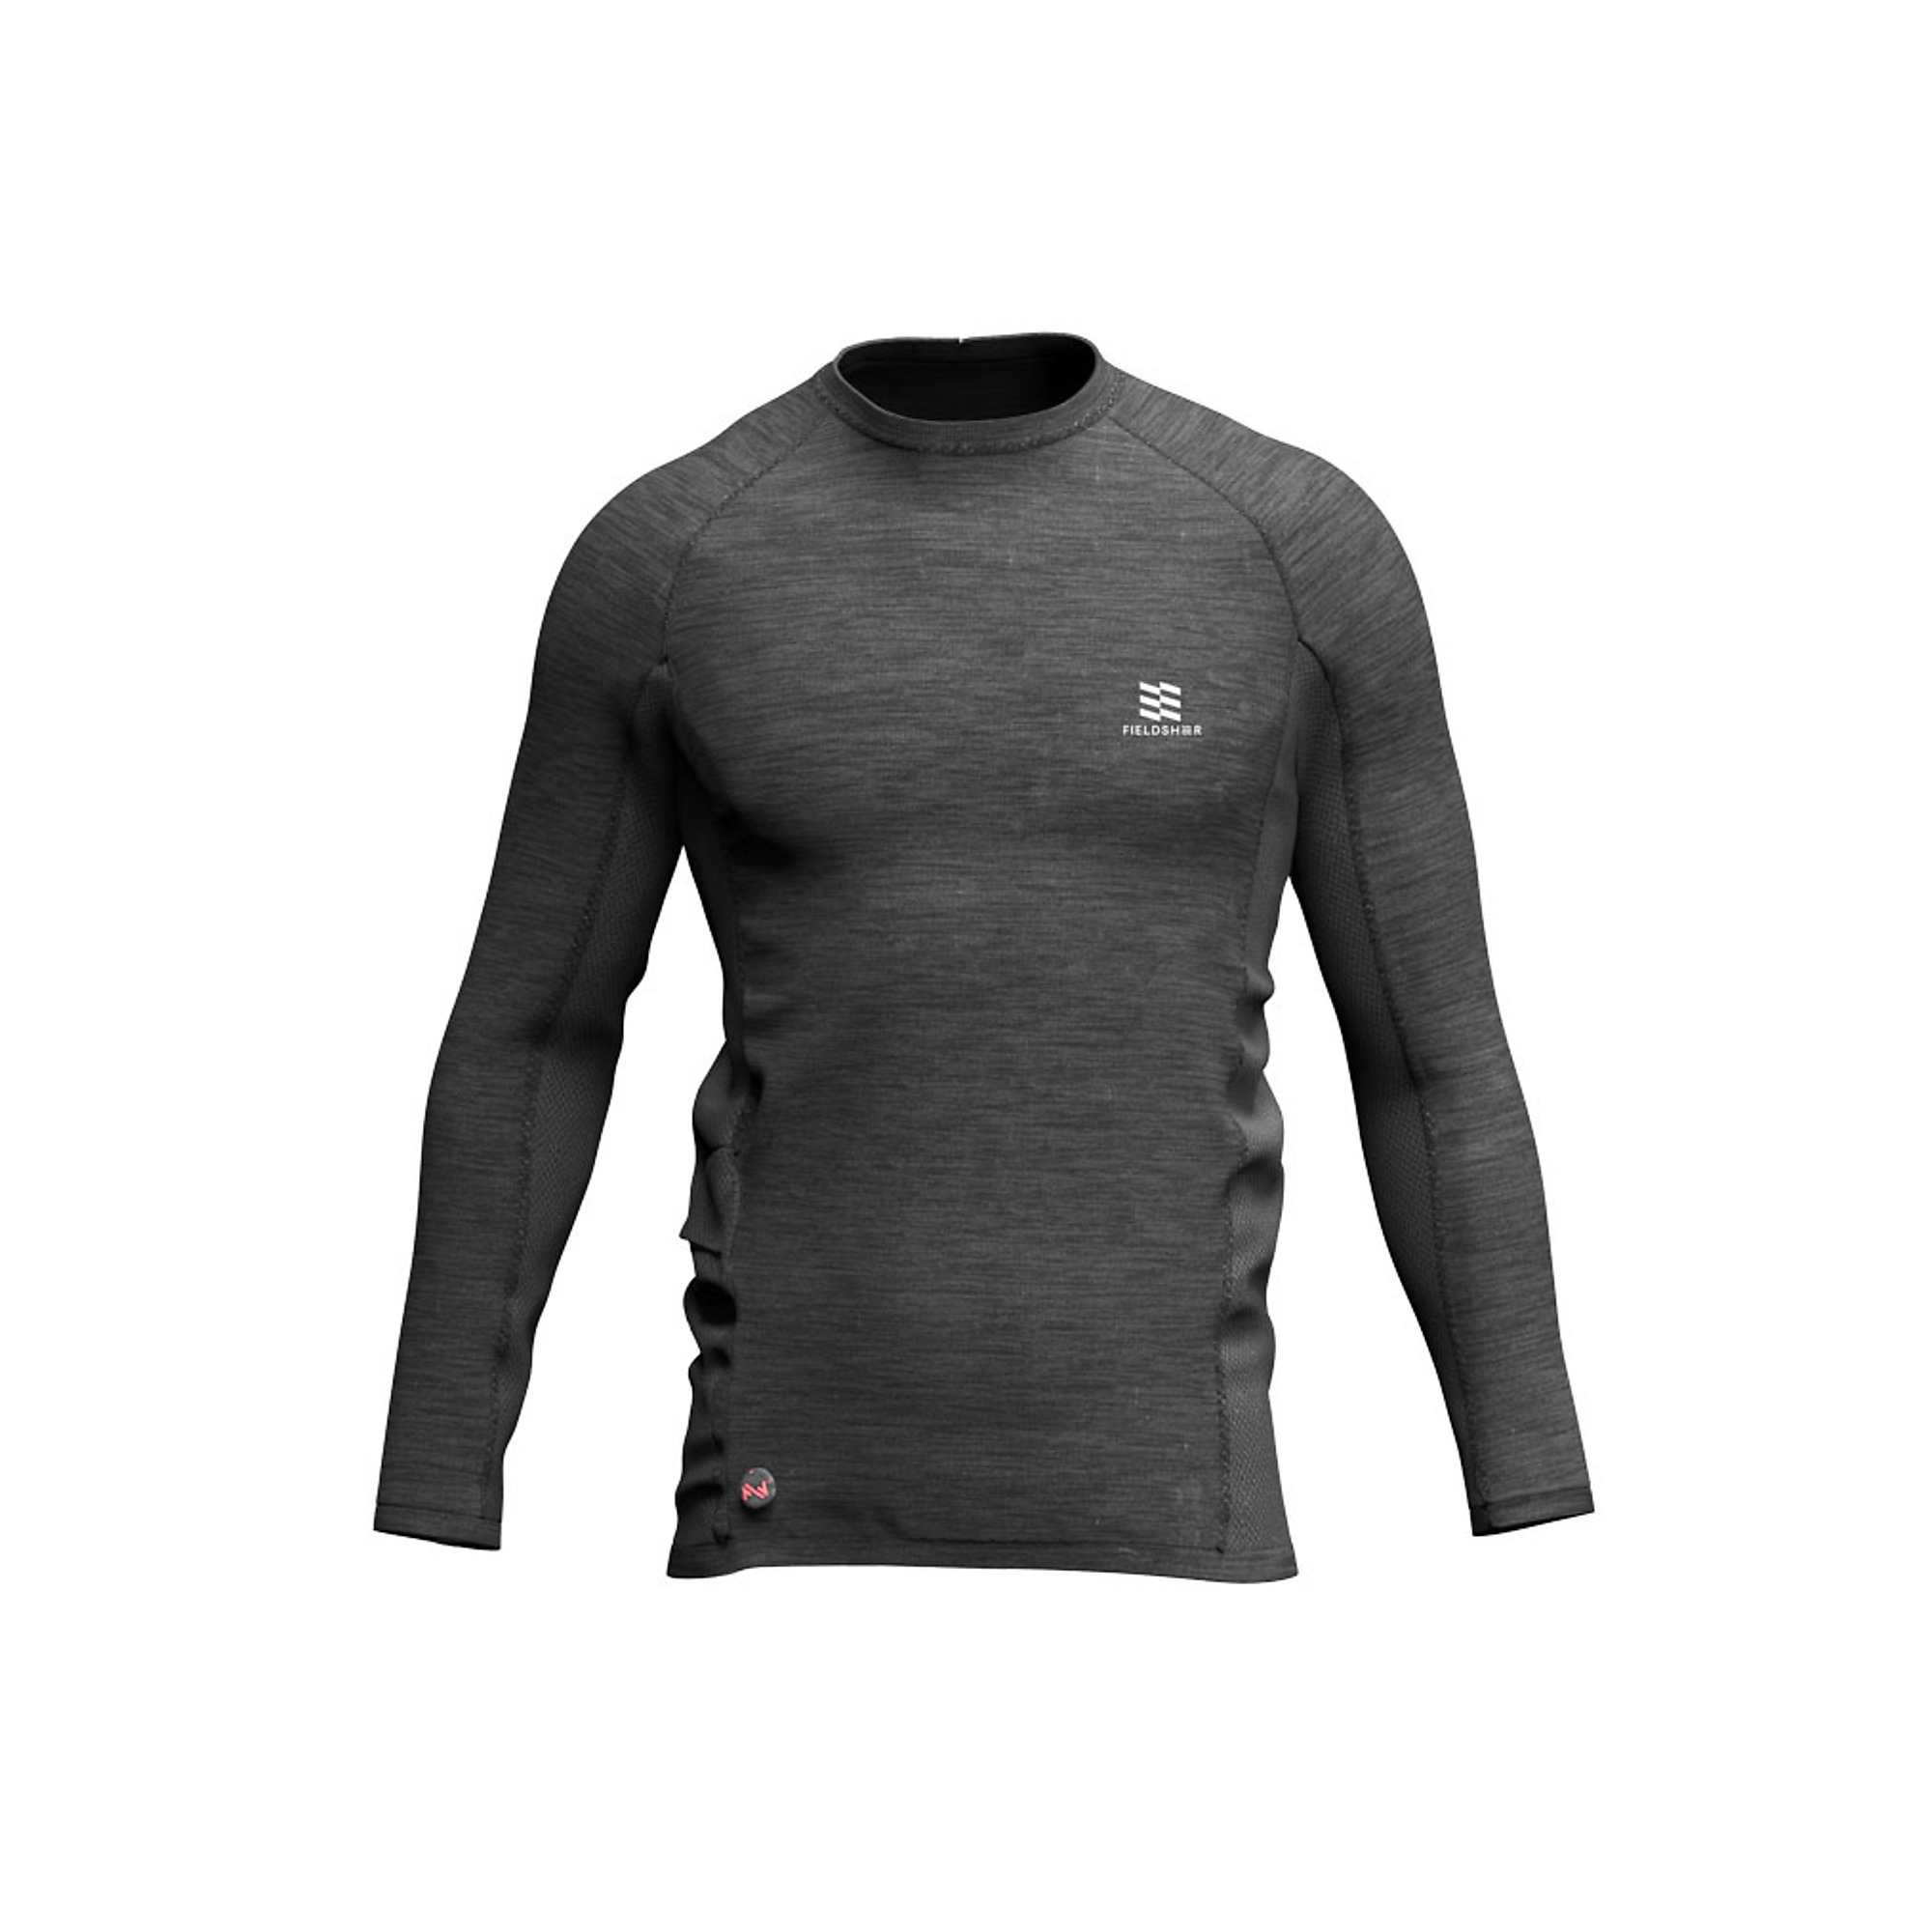 Fieldsheer, Men's Primer Heated Baselayer Shirt, Size M, Color Black, Model MWMT11010320